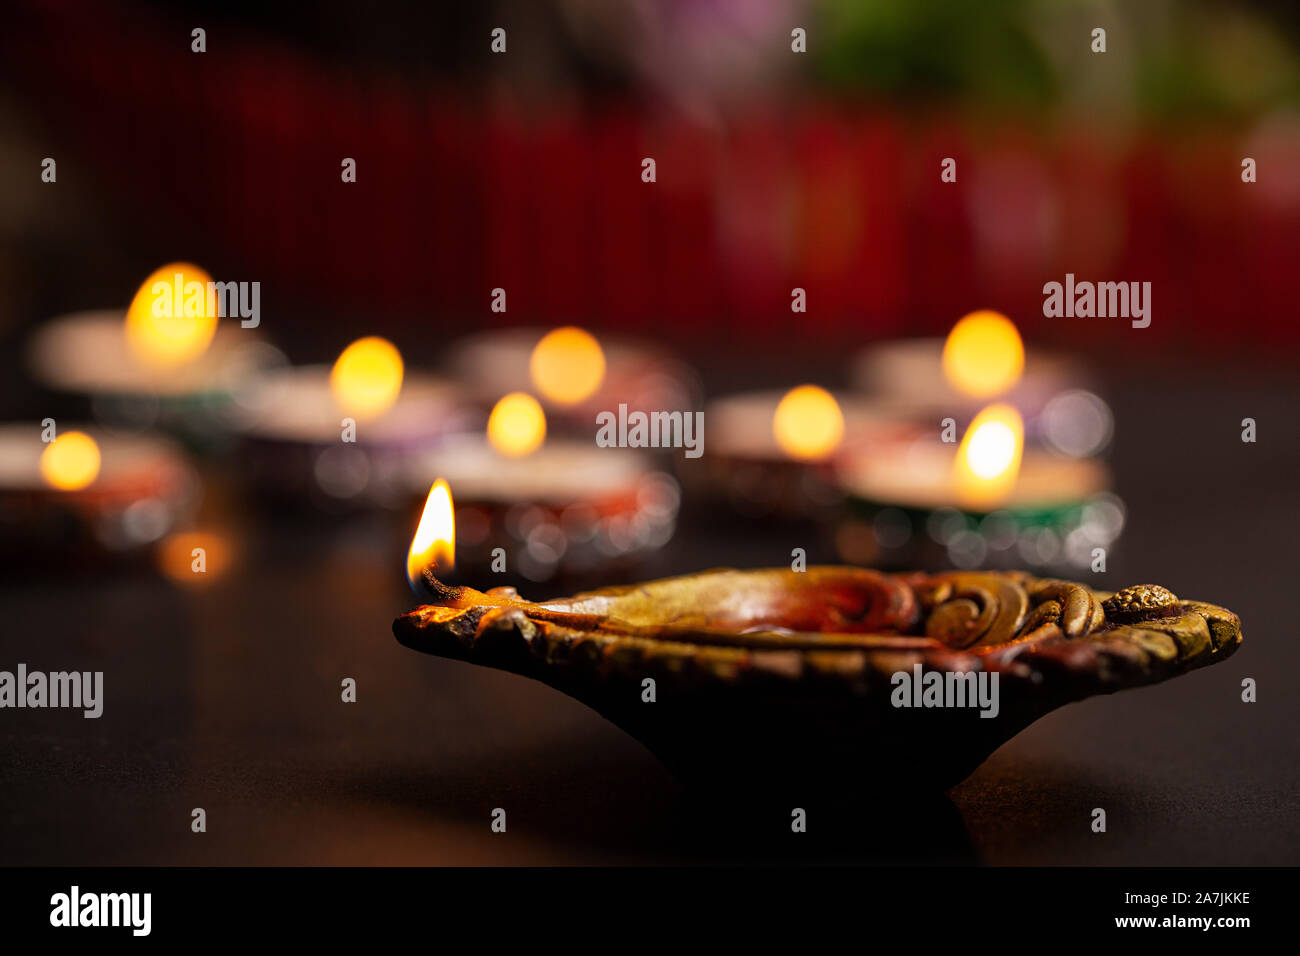 Nobody-Shot Close-up Burning Diya Oil-lamp Light Illuminated On-Deepawali Festival Celebration Stock Photo